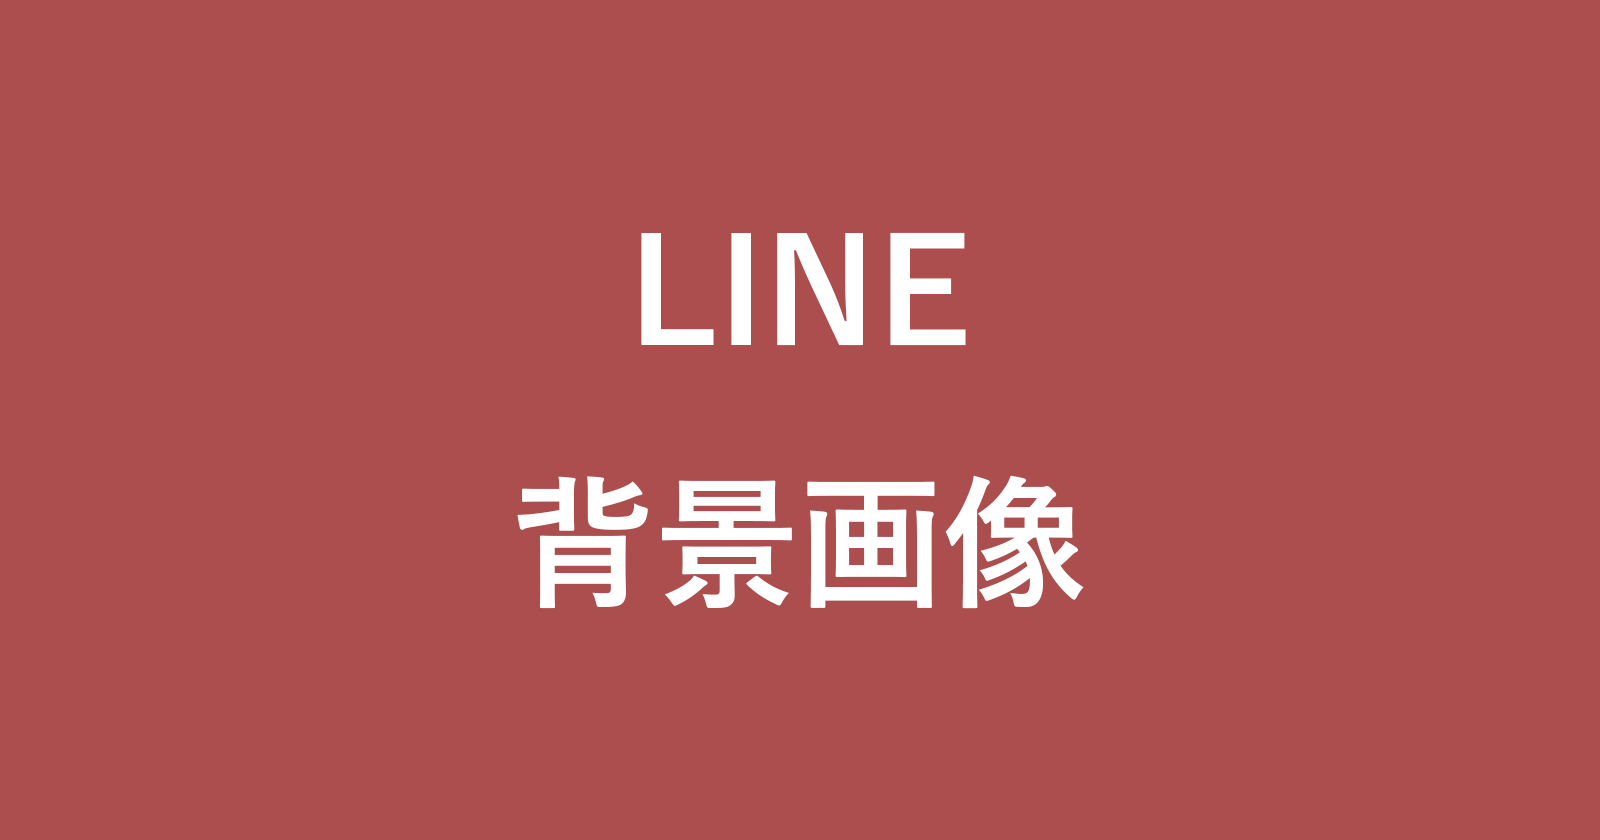 line background